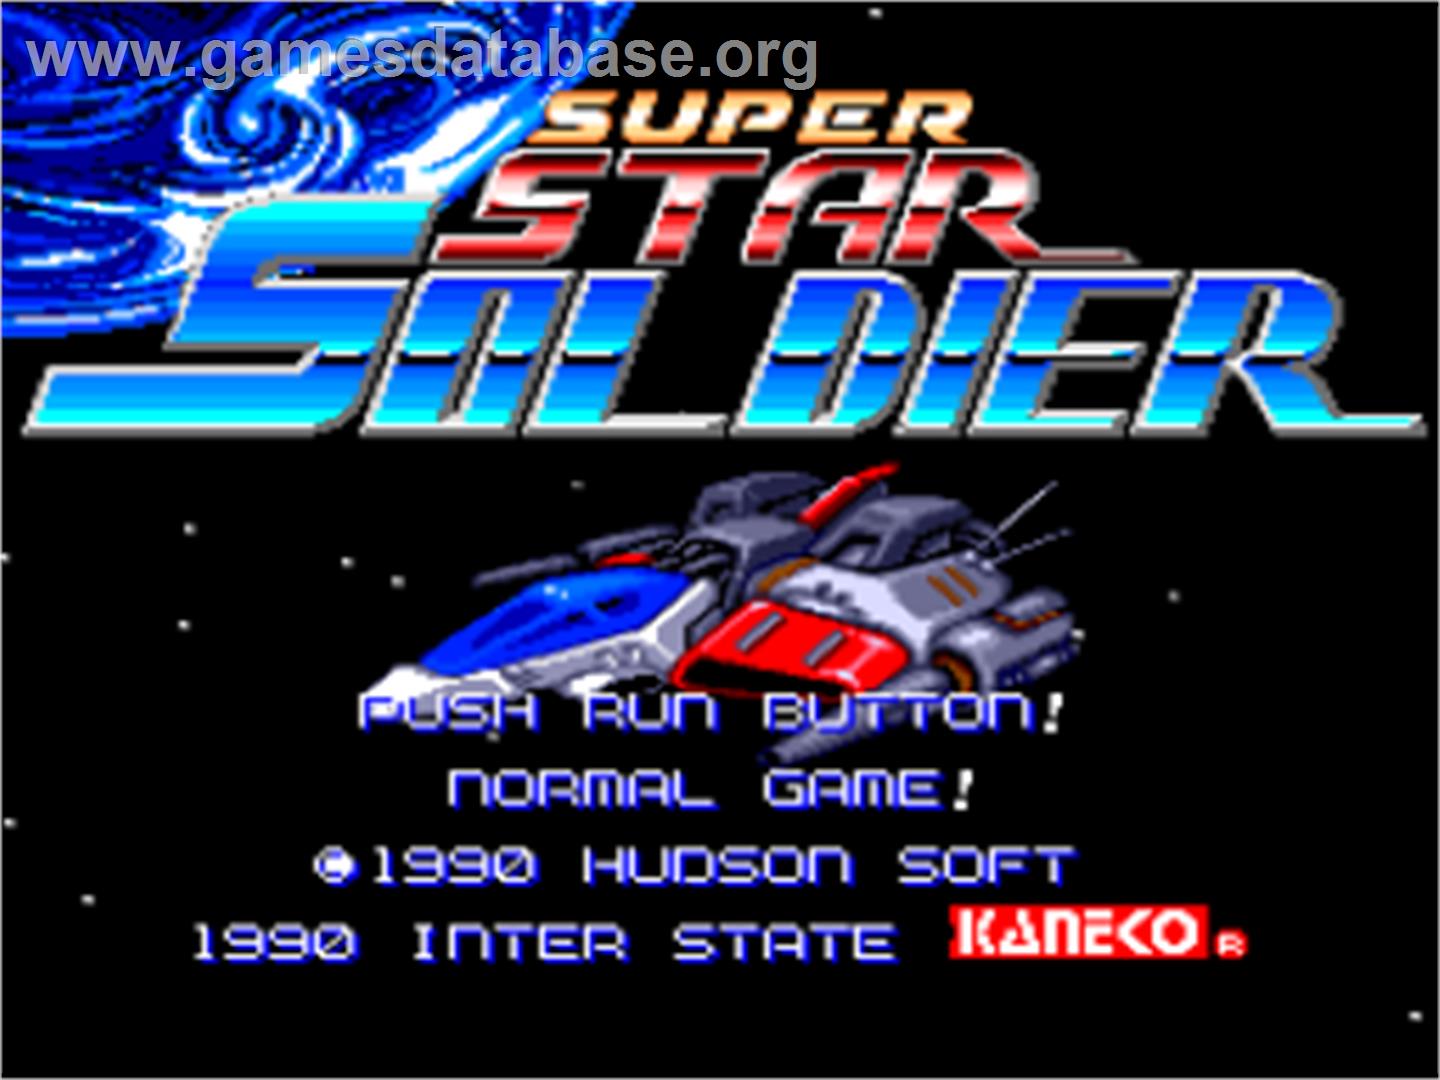 Super Star Soldier - NEC TurboGrafx-16 - Artwork - Title Screen